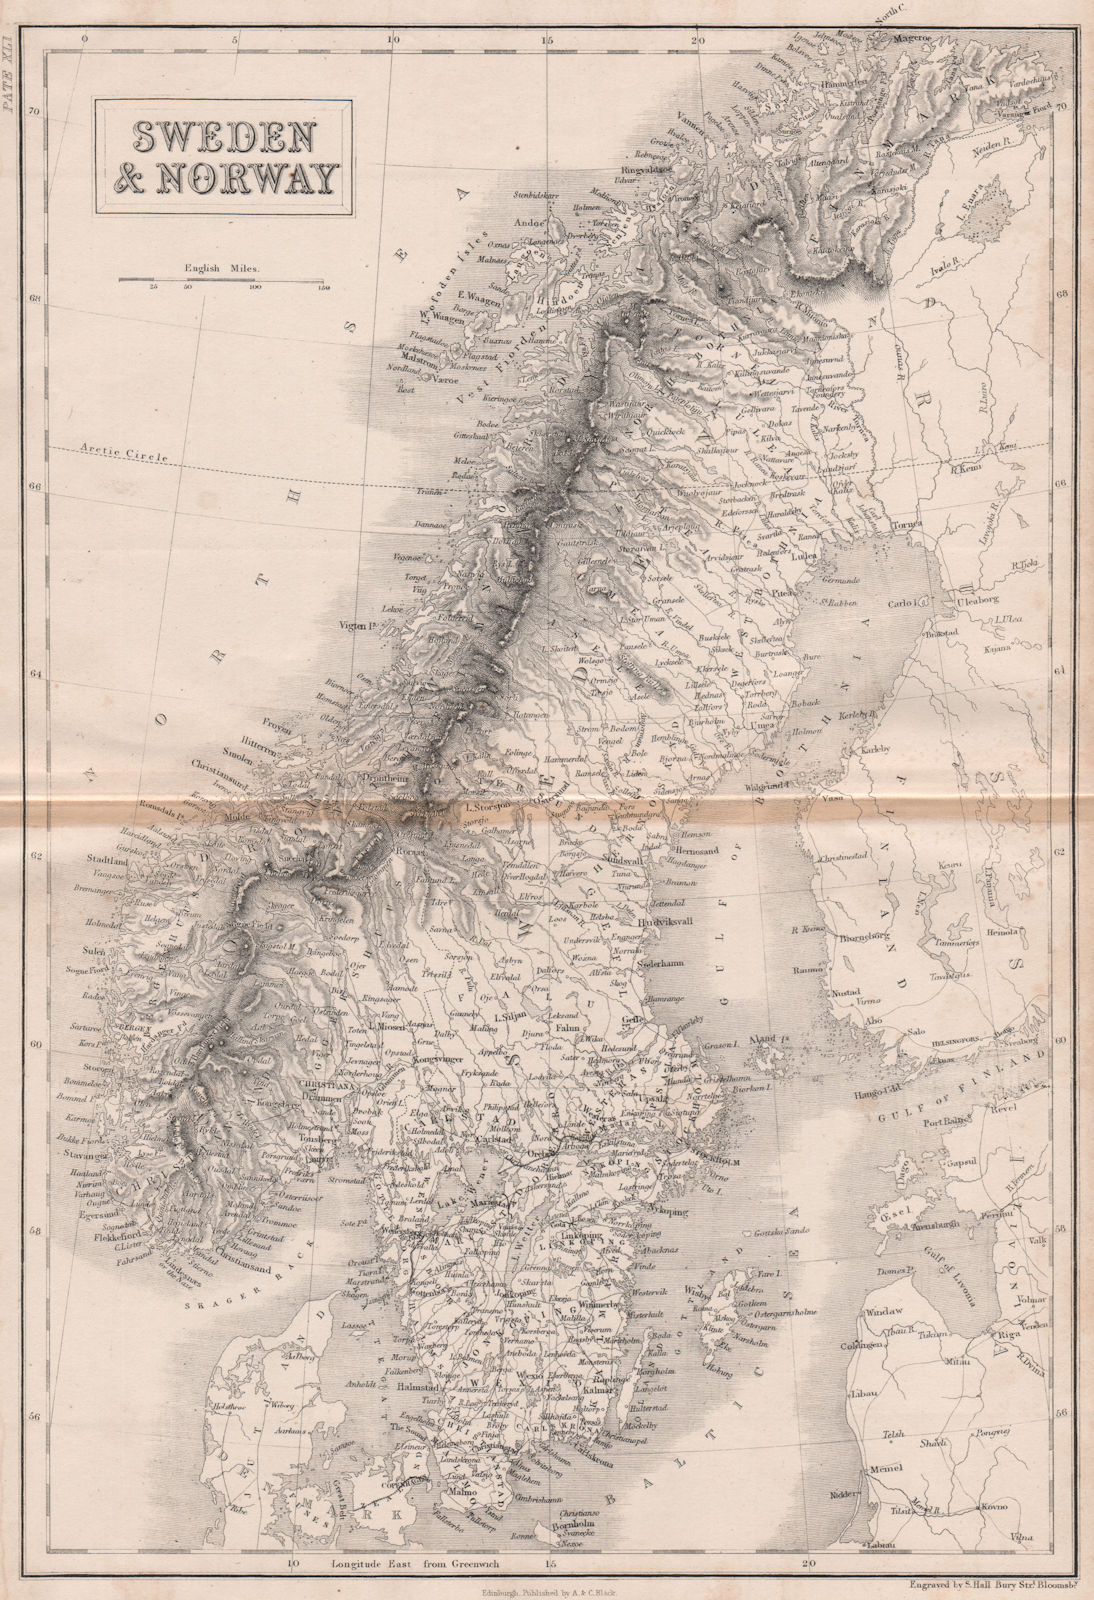 Associate Product Sweden & Norway. Scandinavia. Railways. BRITANNICA 1860 old antique map chart